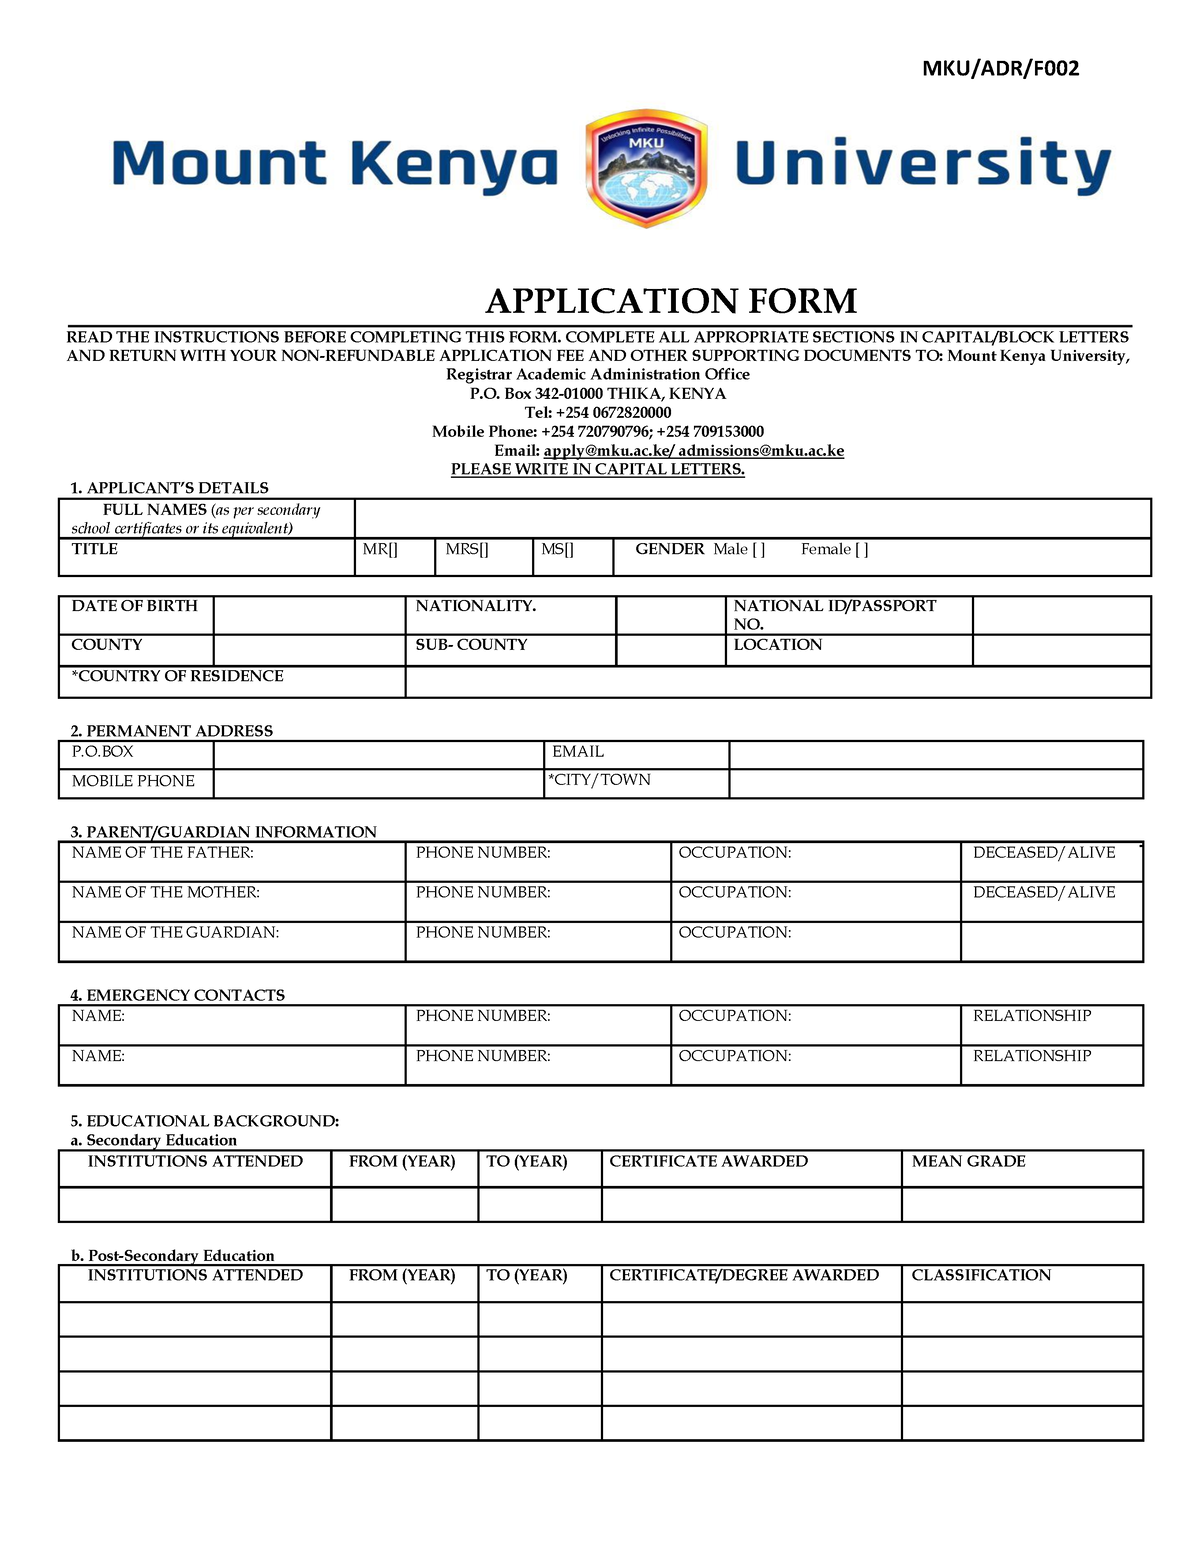 mount kenya university application letter